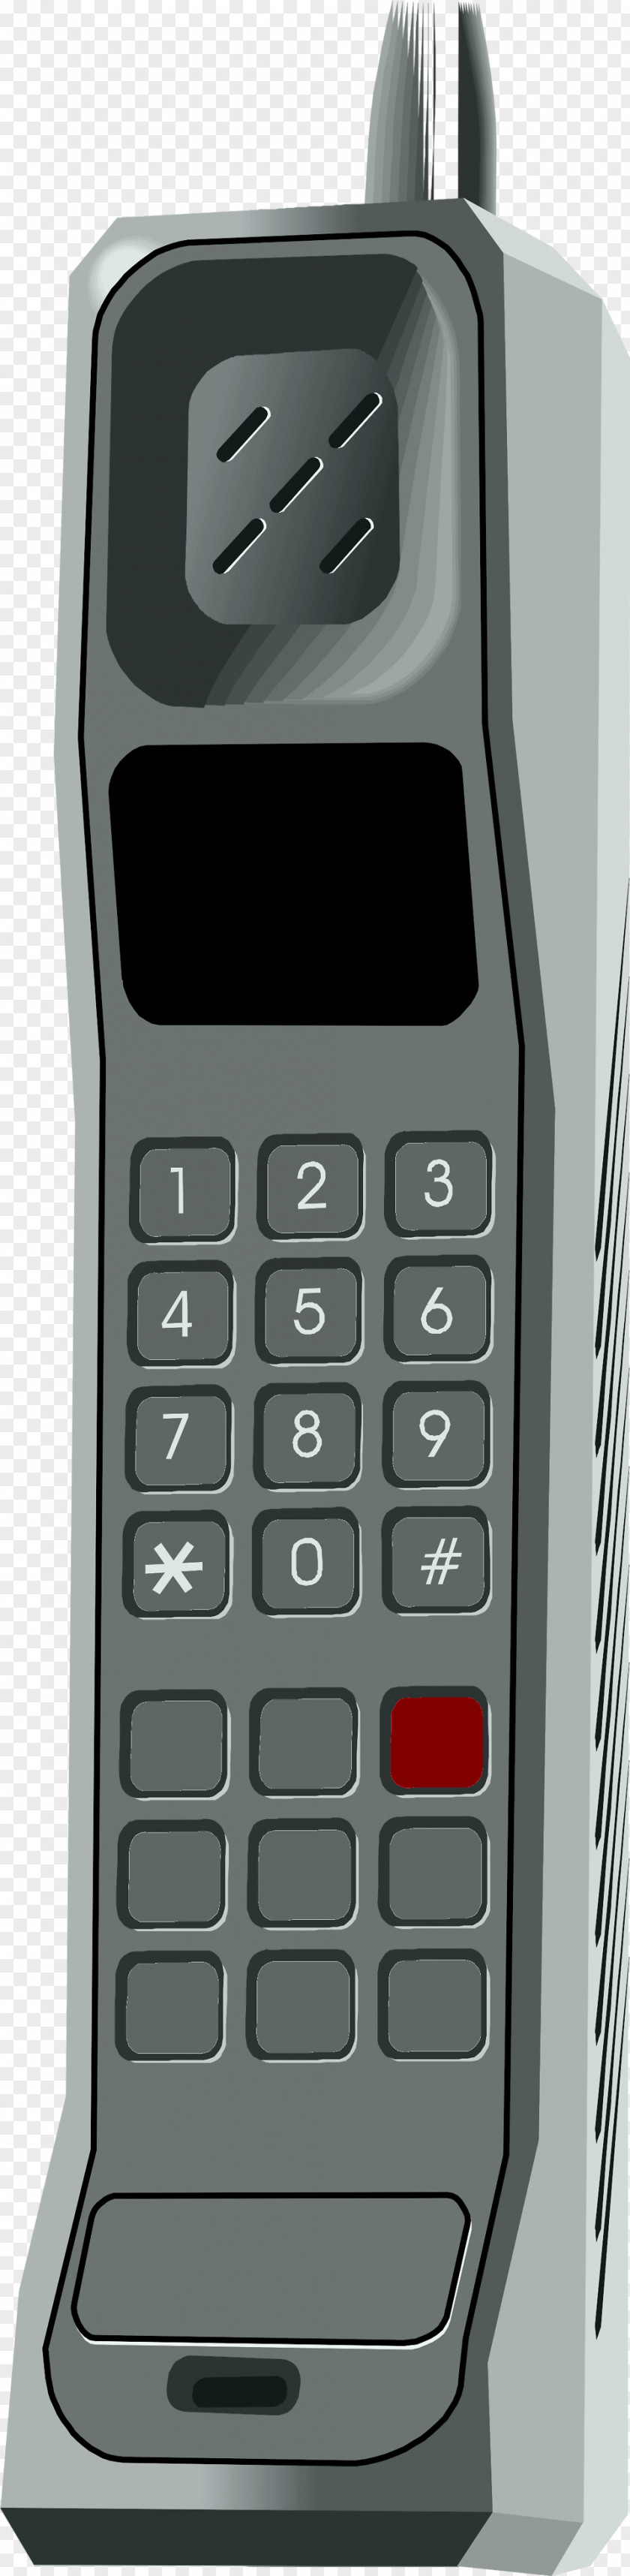 Cellular Telephone Product Design Numeric Keypads Electronics PNG